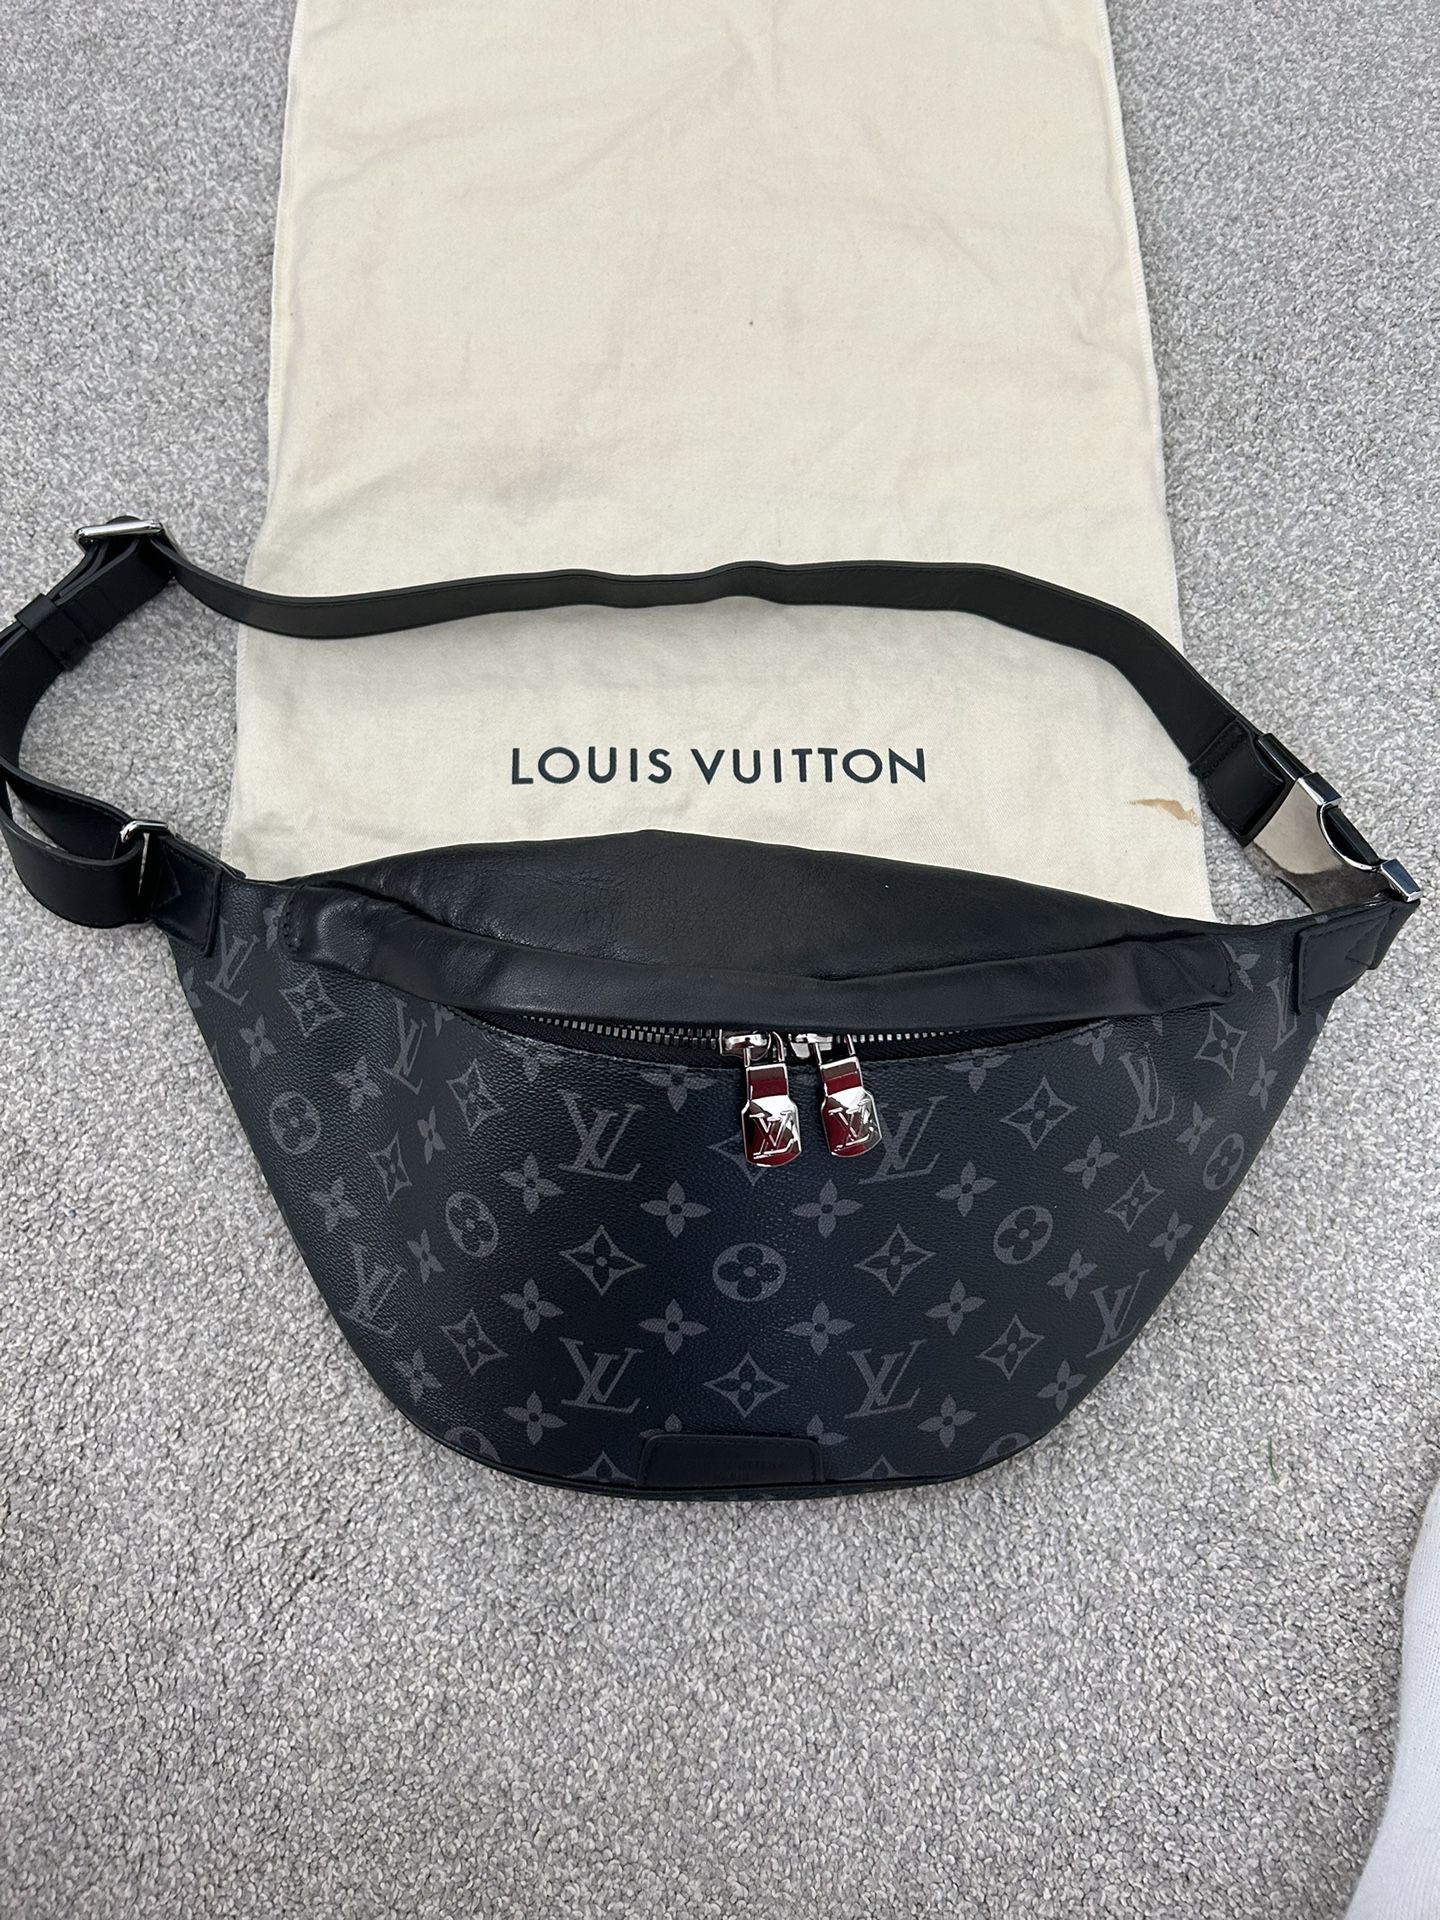 Authentic LV Bag